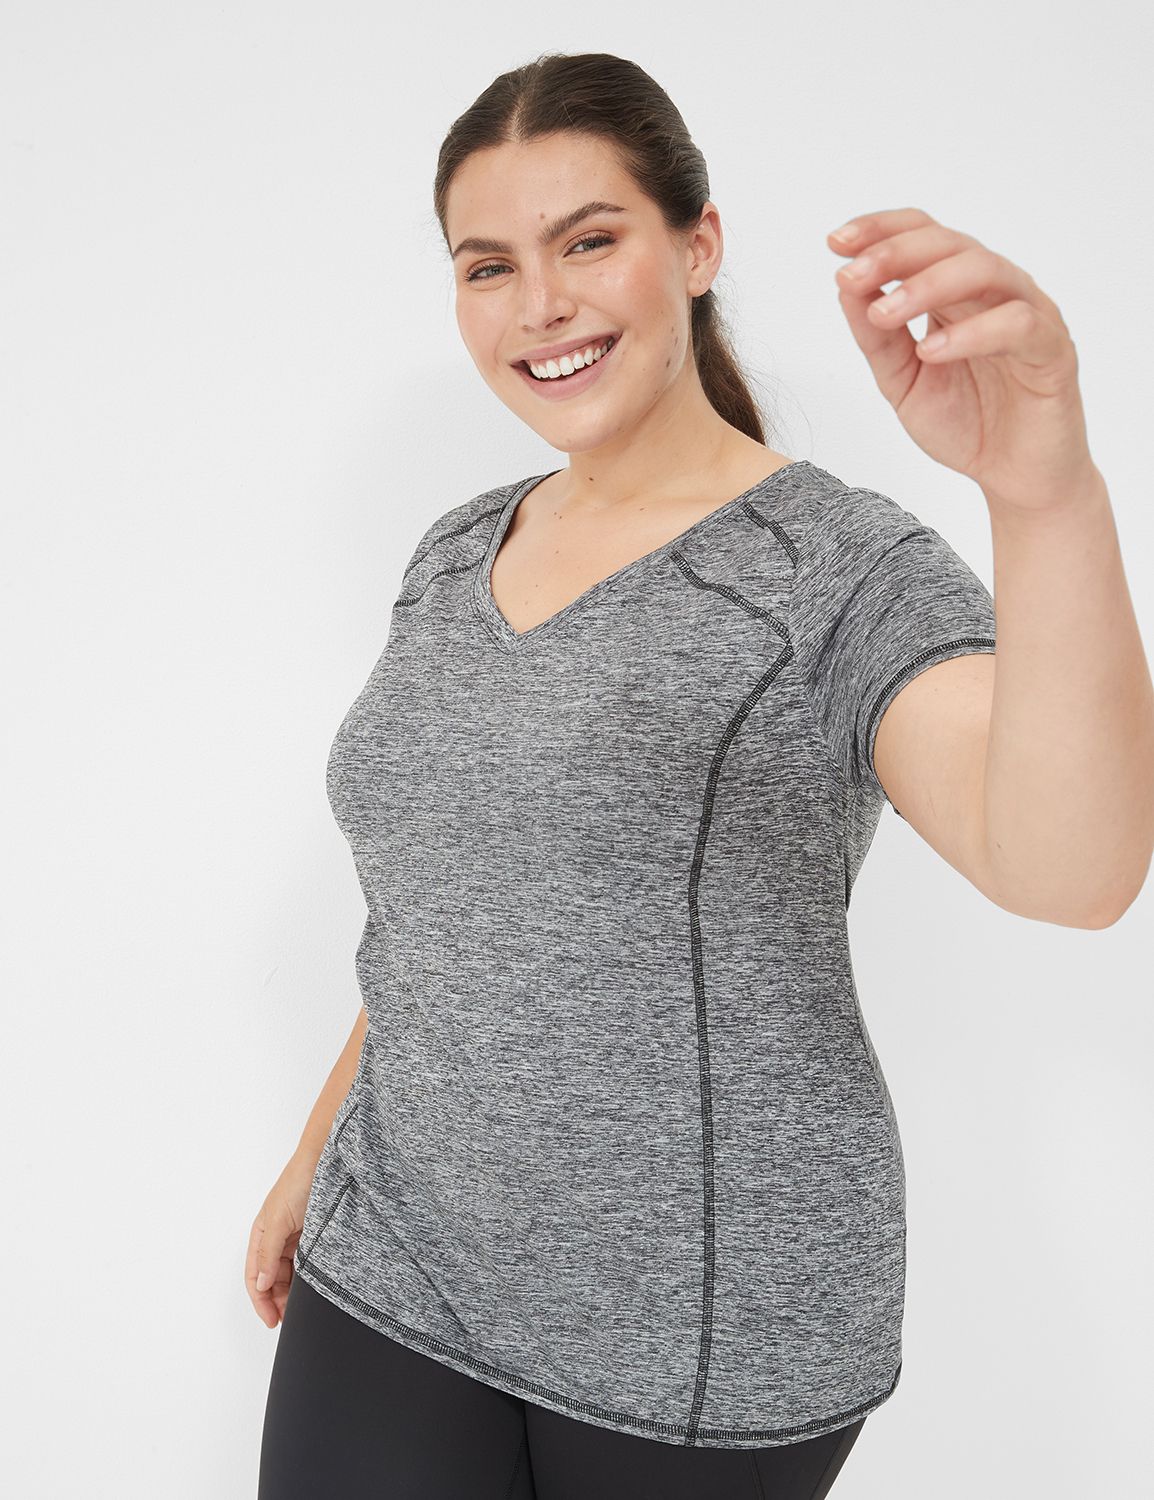 Plus Size Women's Active Tees: Workout T-Shirts | Lane Bryant